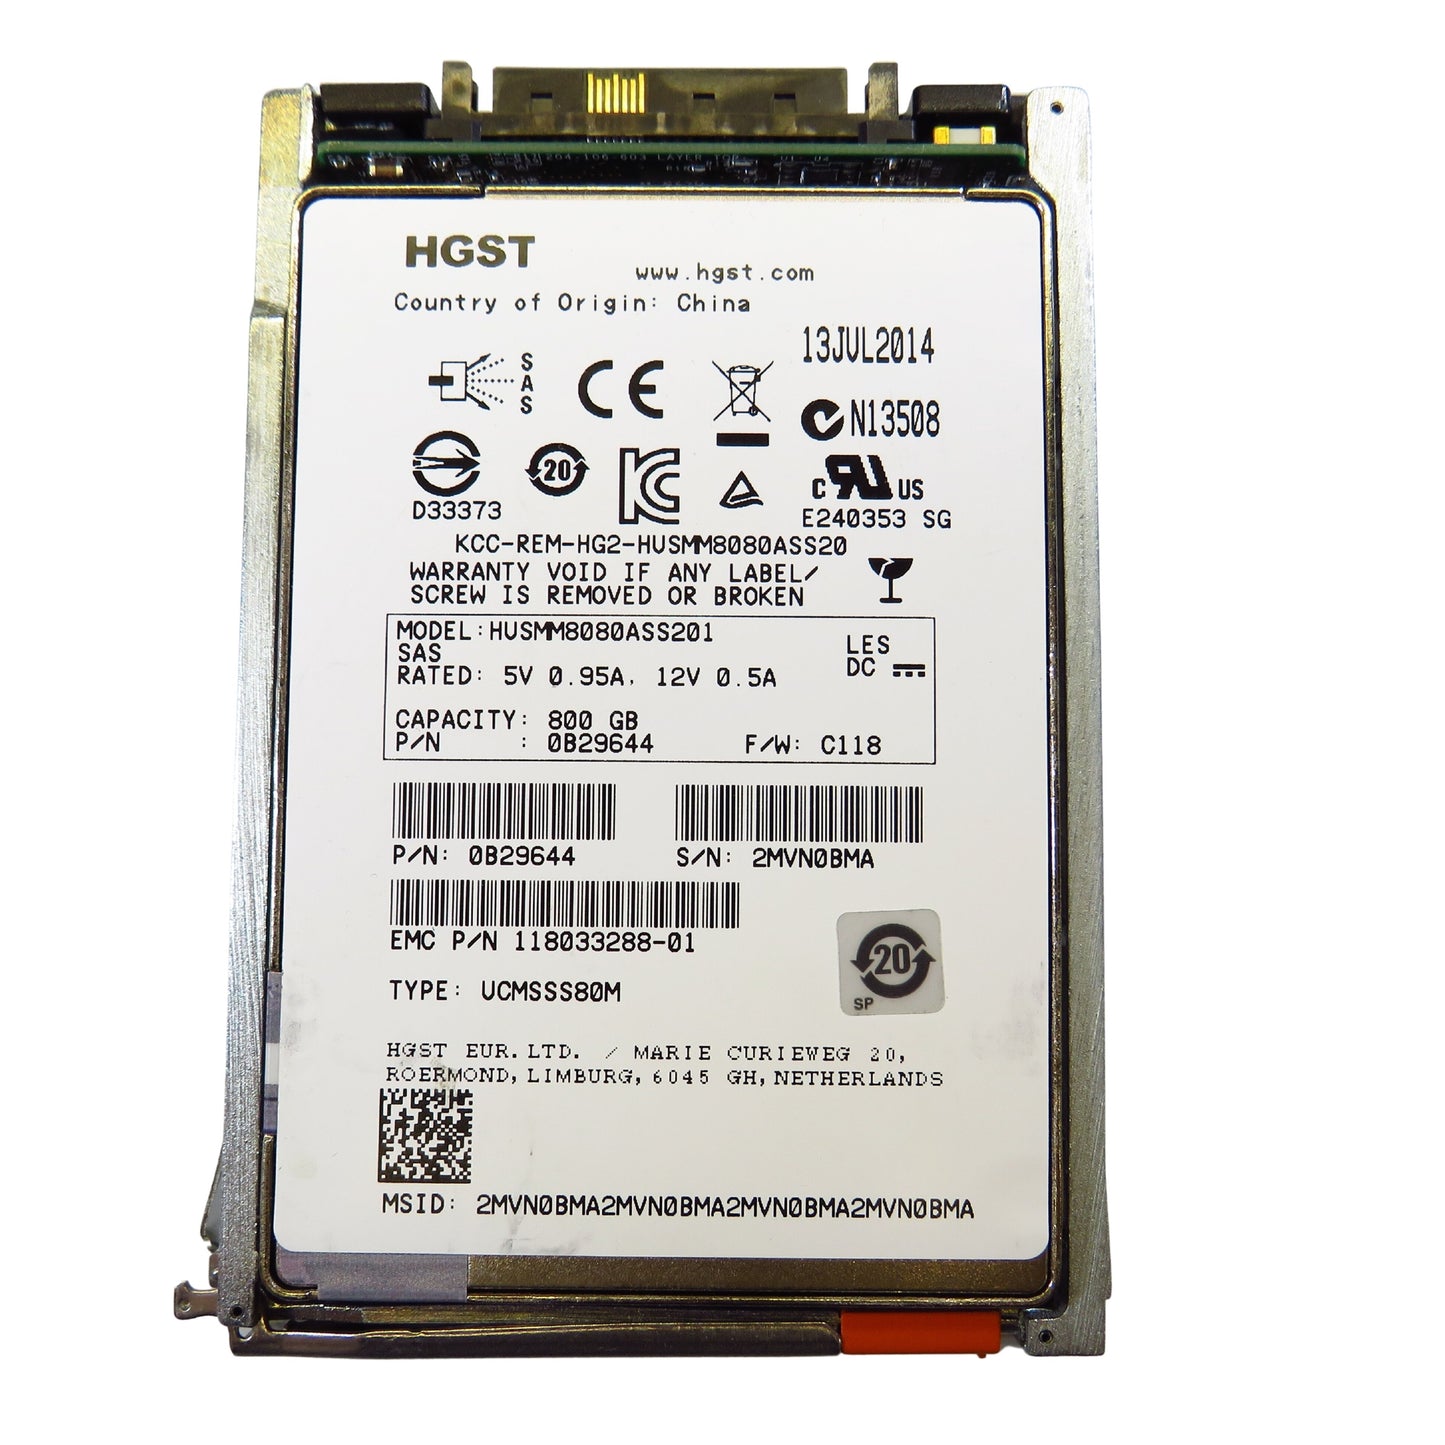 EMC 005050674 800GB 2.5" SAS 12Gbps MLC SSD Solid State Drive (Refurbished)